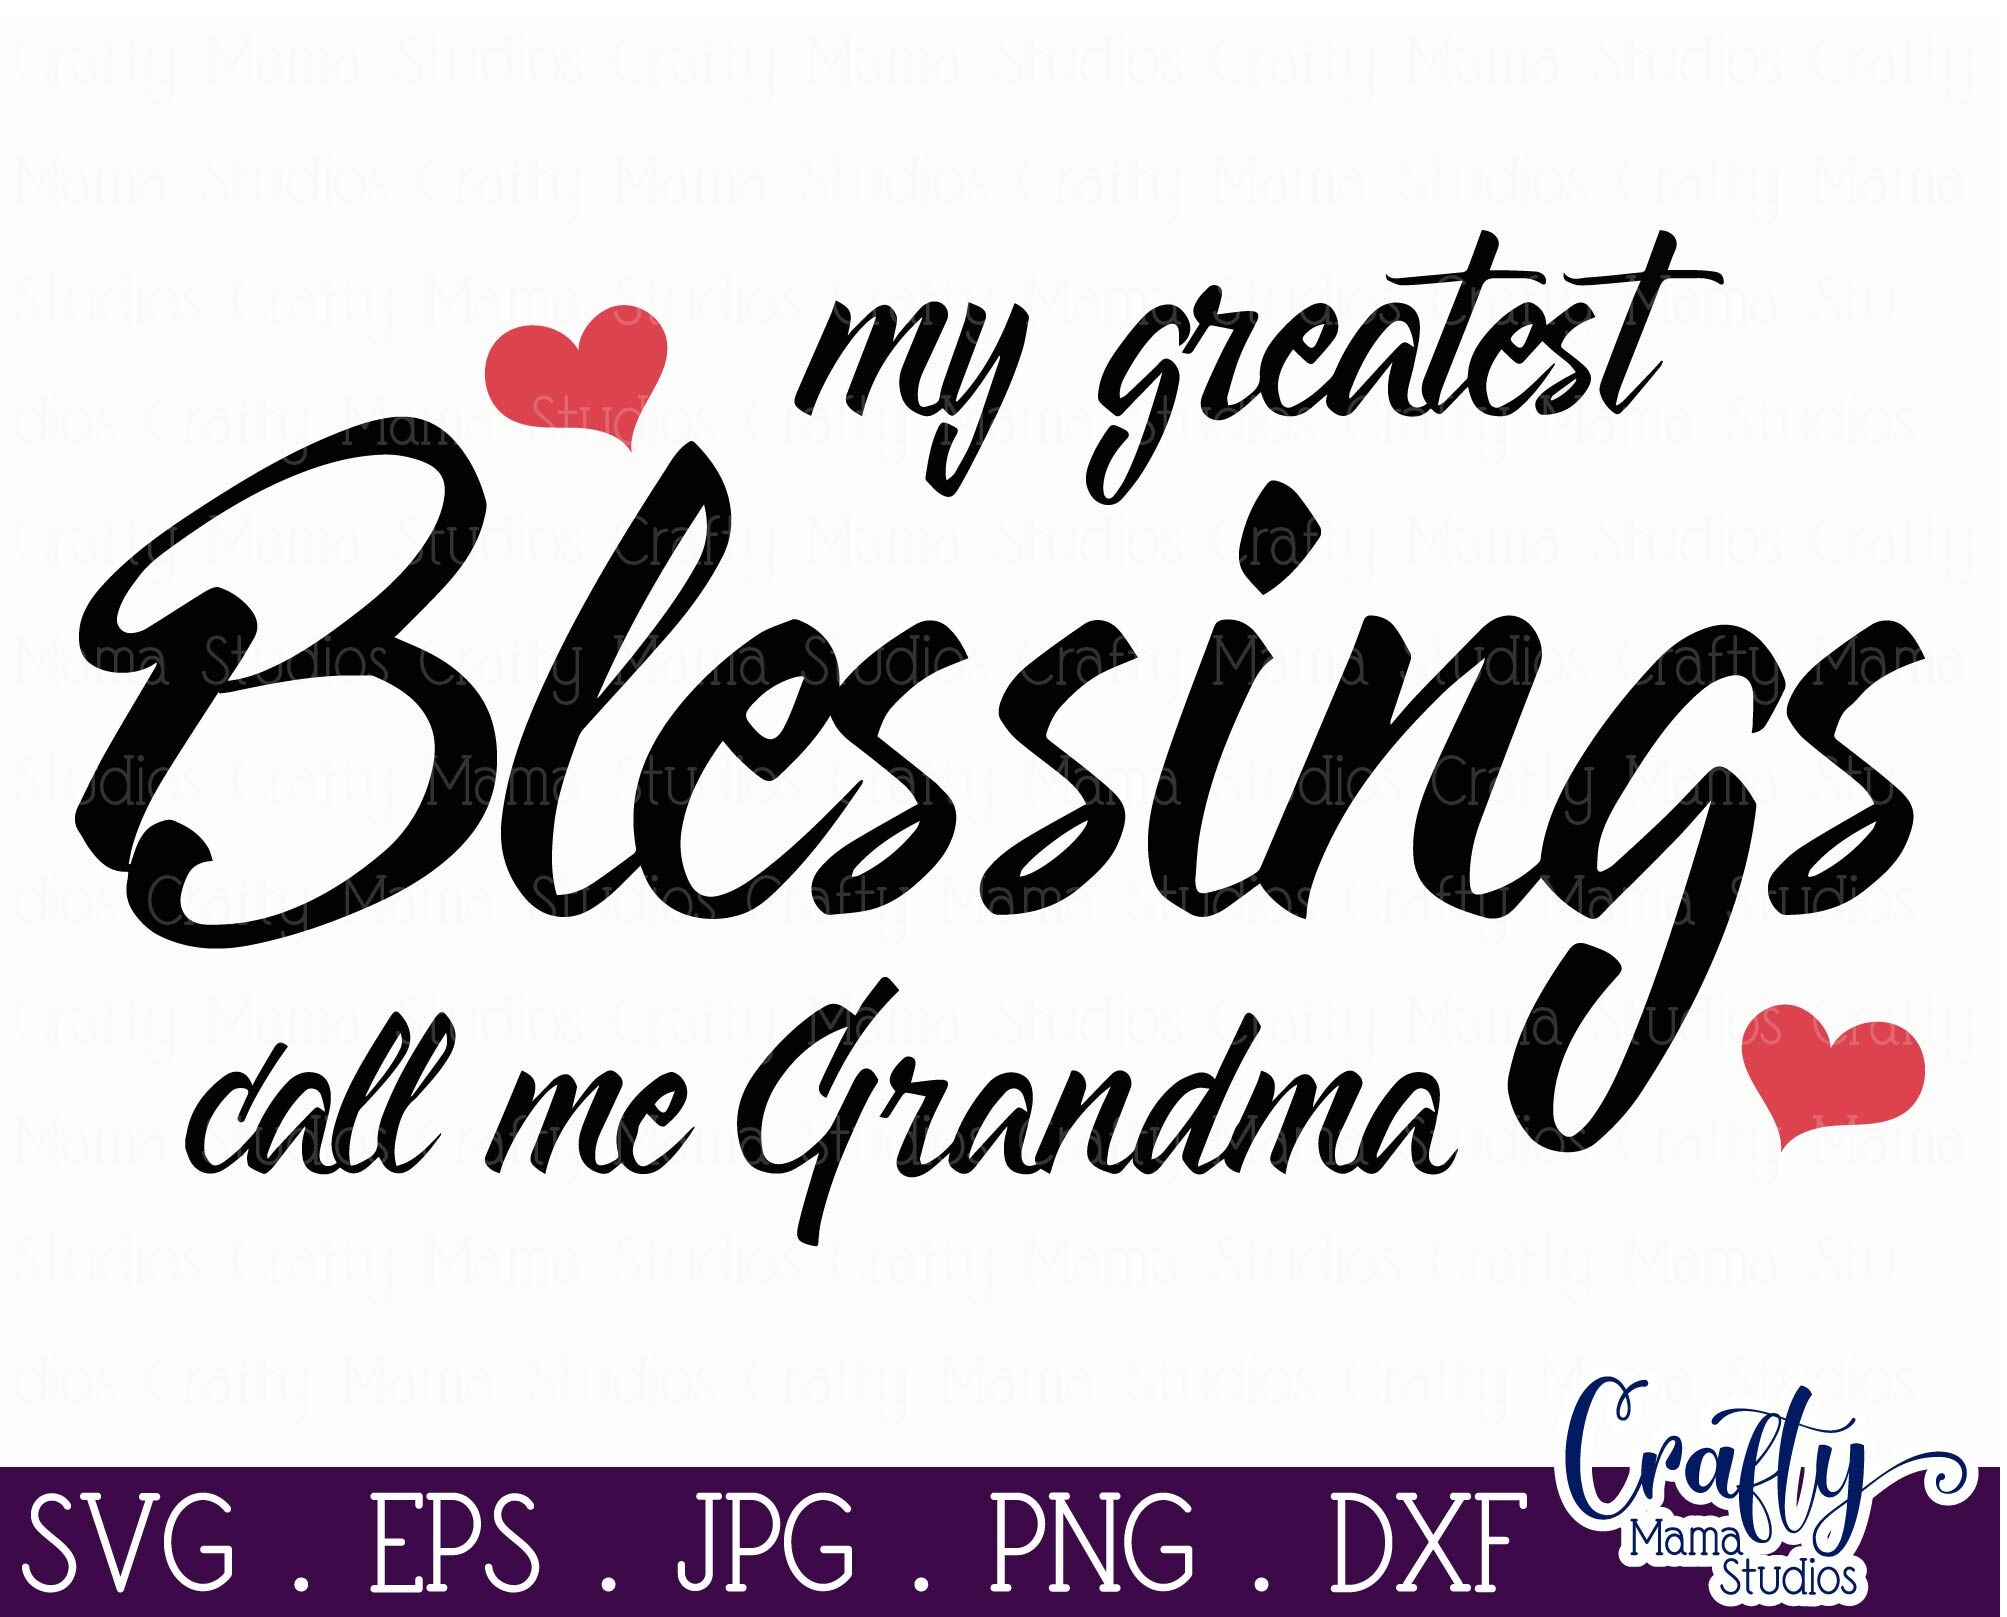 Download My Greatest Blessings Call Me Grandma Svg Grandma Svg By Crafty Mama Studios Thehungryjpeg Com